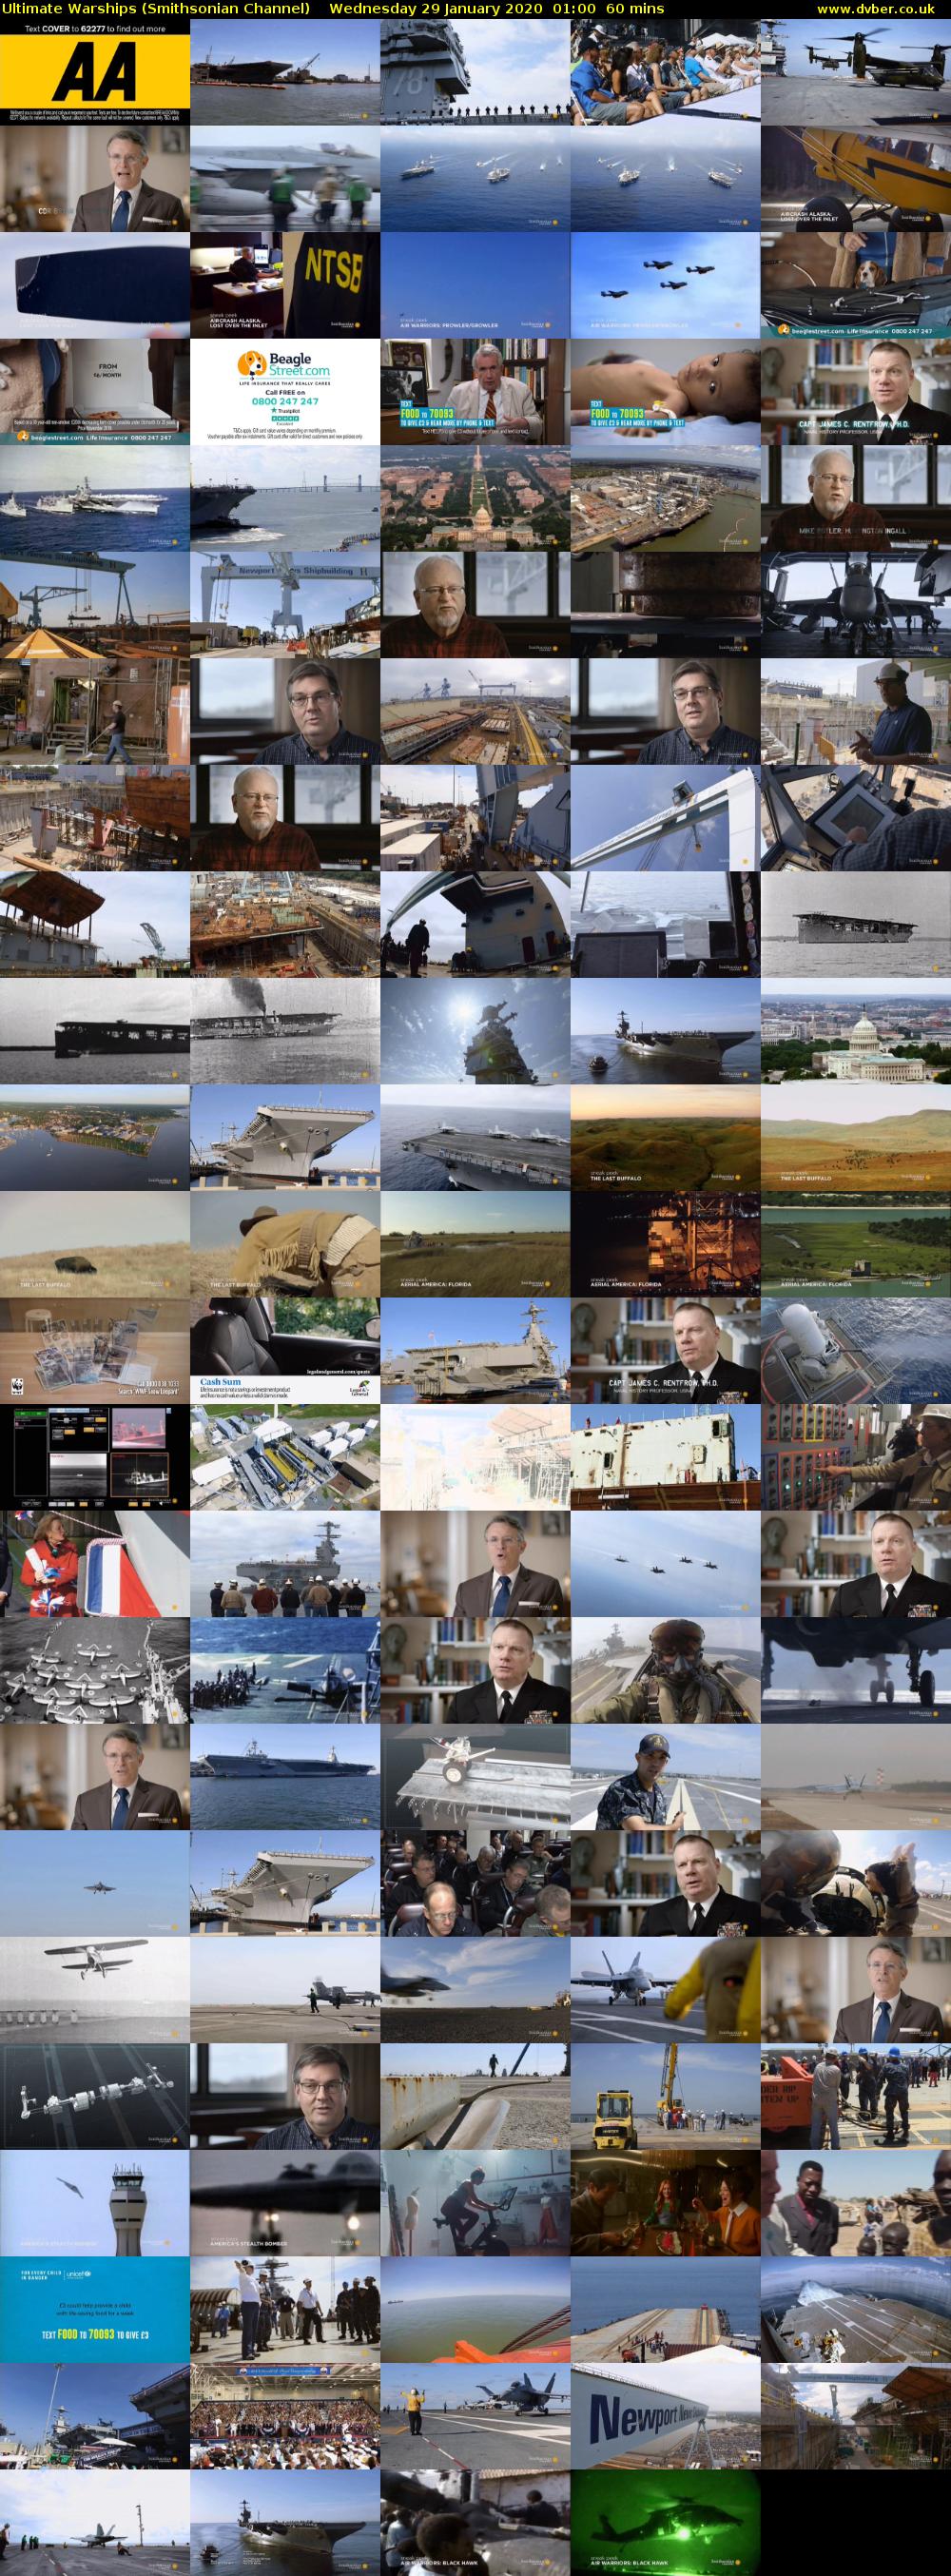 Ultimate Warships (Smithsonian Channel) Wednesday 29 January 2020 01:00 - 02:00